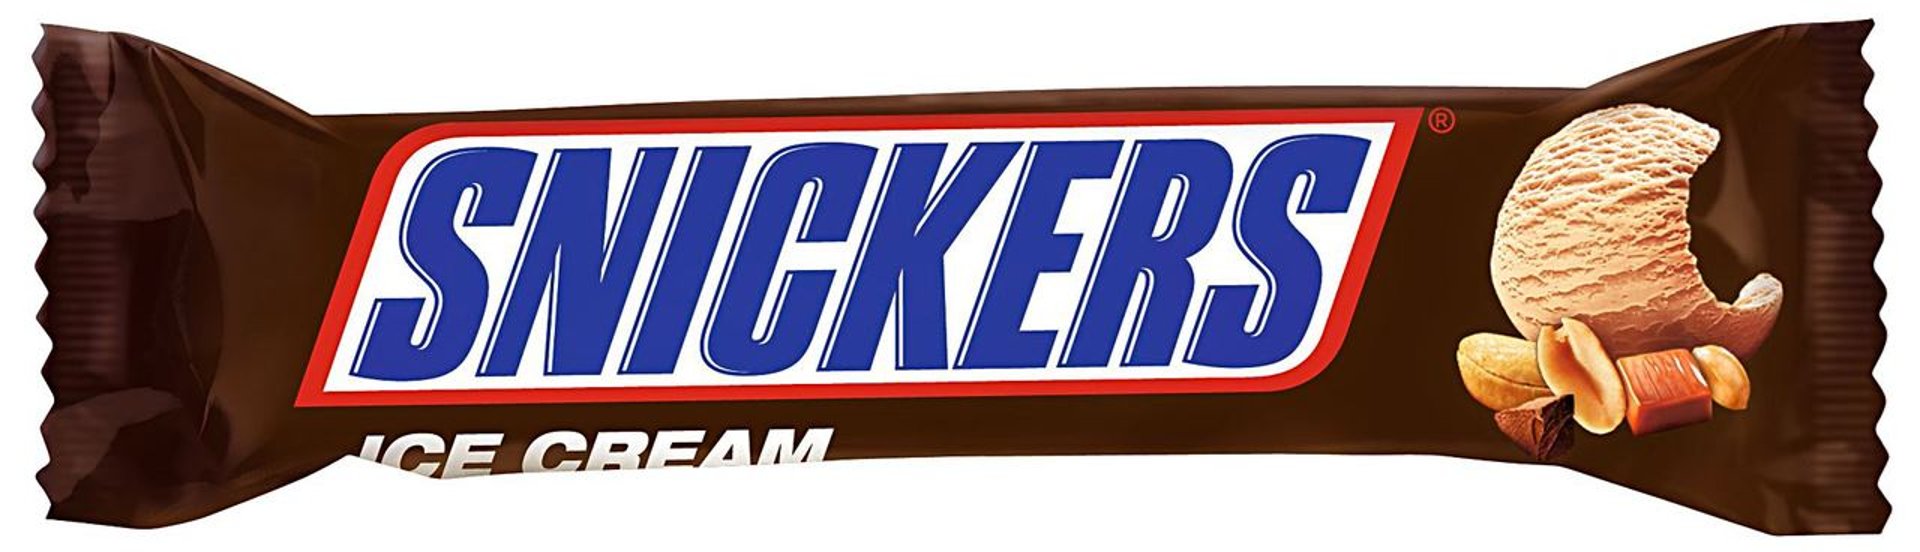 Snickers - Ice Cream tiefgefroren - 24 x 73 ml Kiste